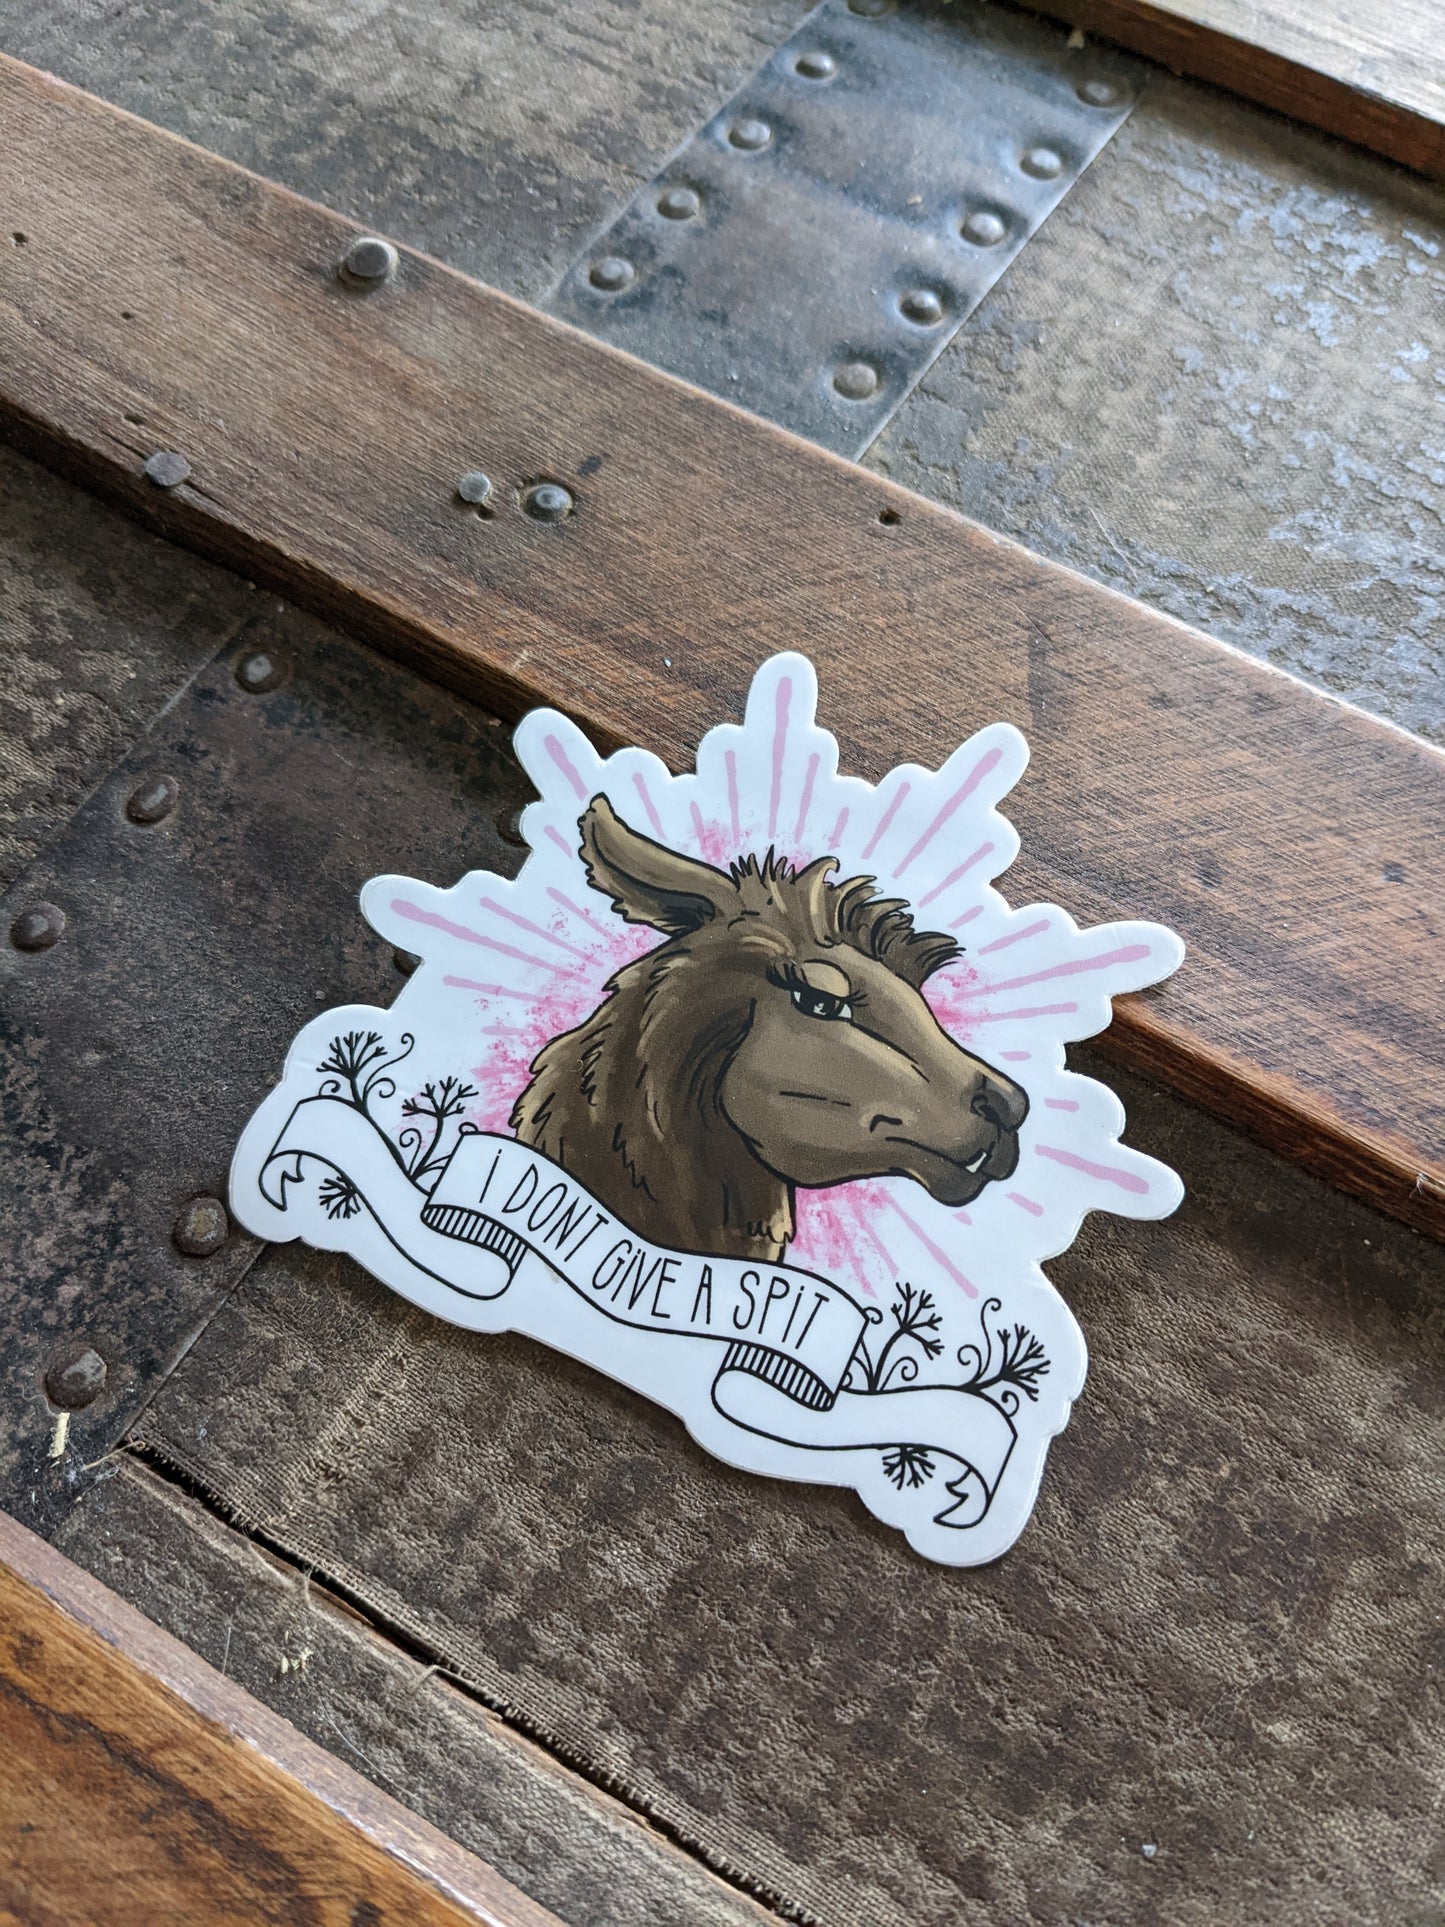 Alpaca & Llama Sticker Pack 2022 Edition - Decorative Decals (Set of 5)